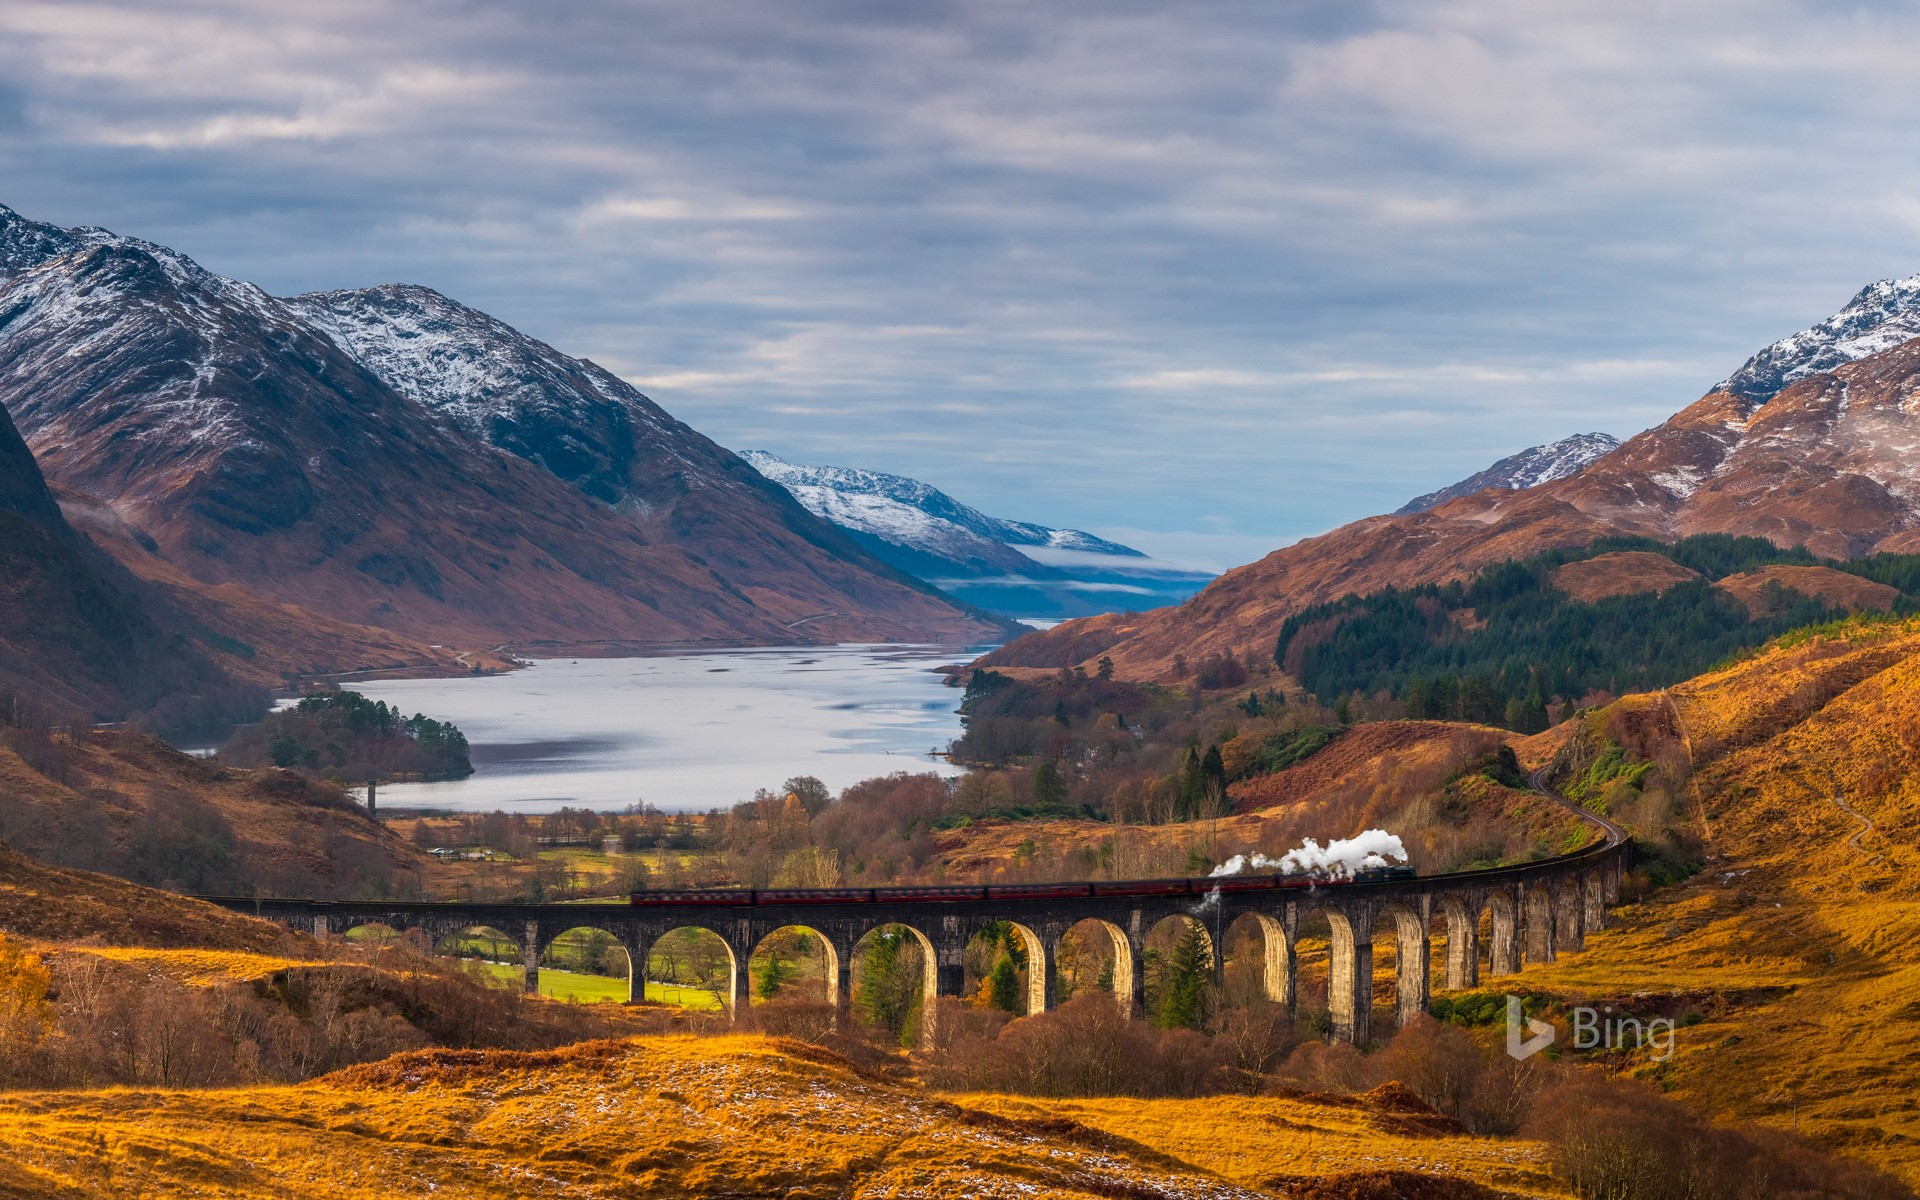 The Glenfinnan Viaduct in Scotland